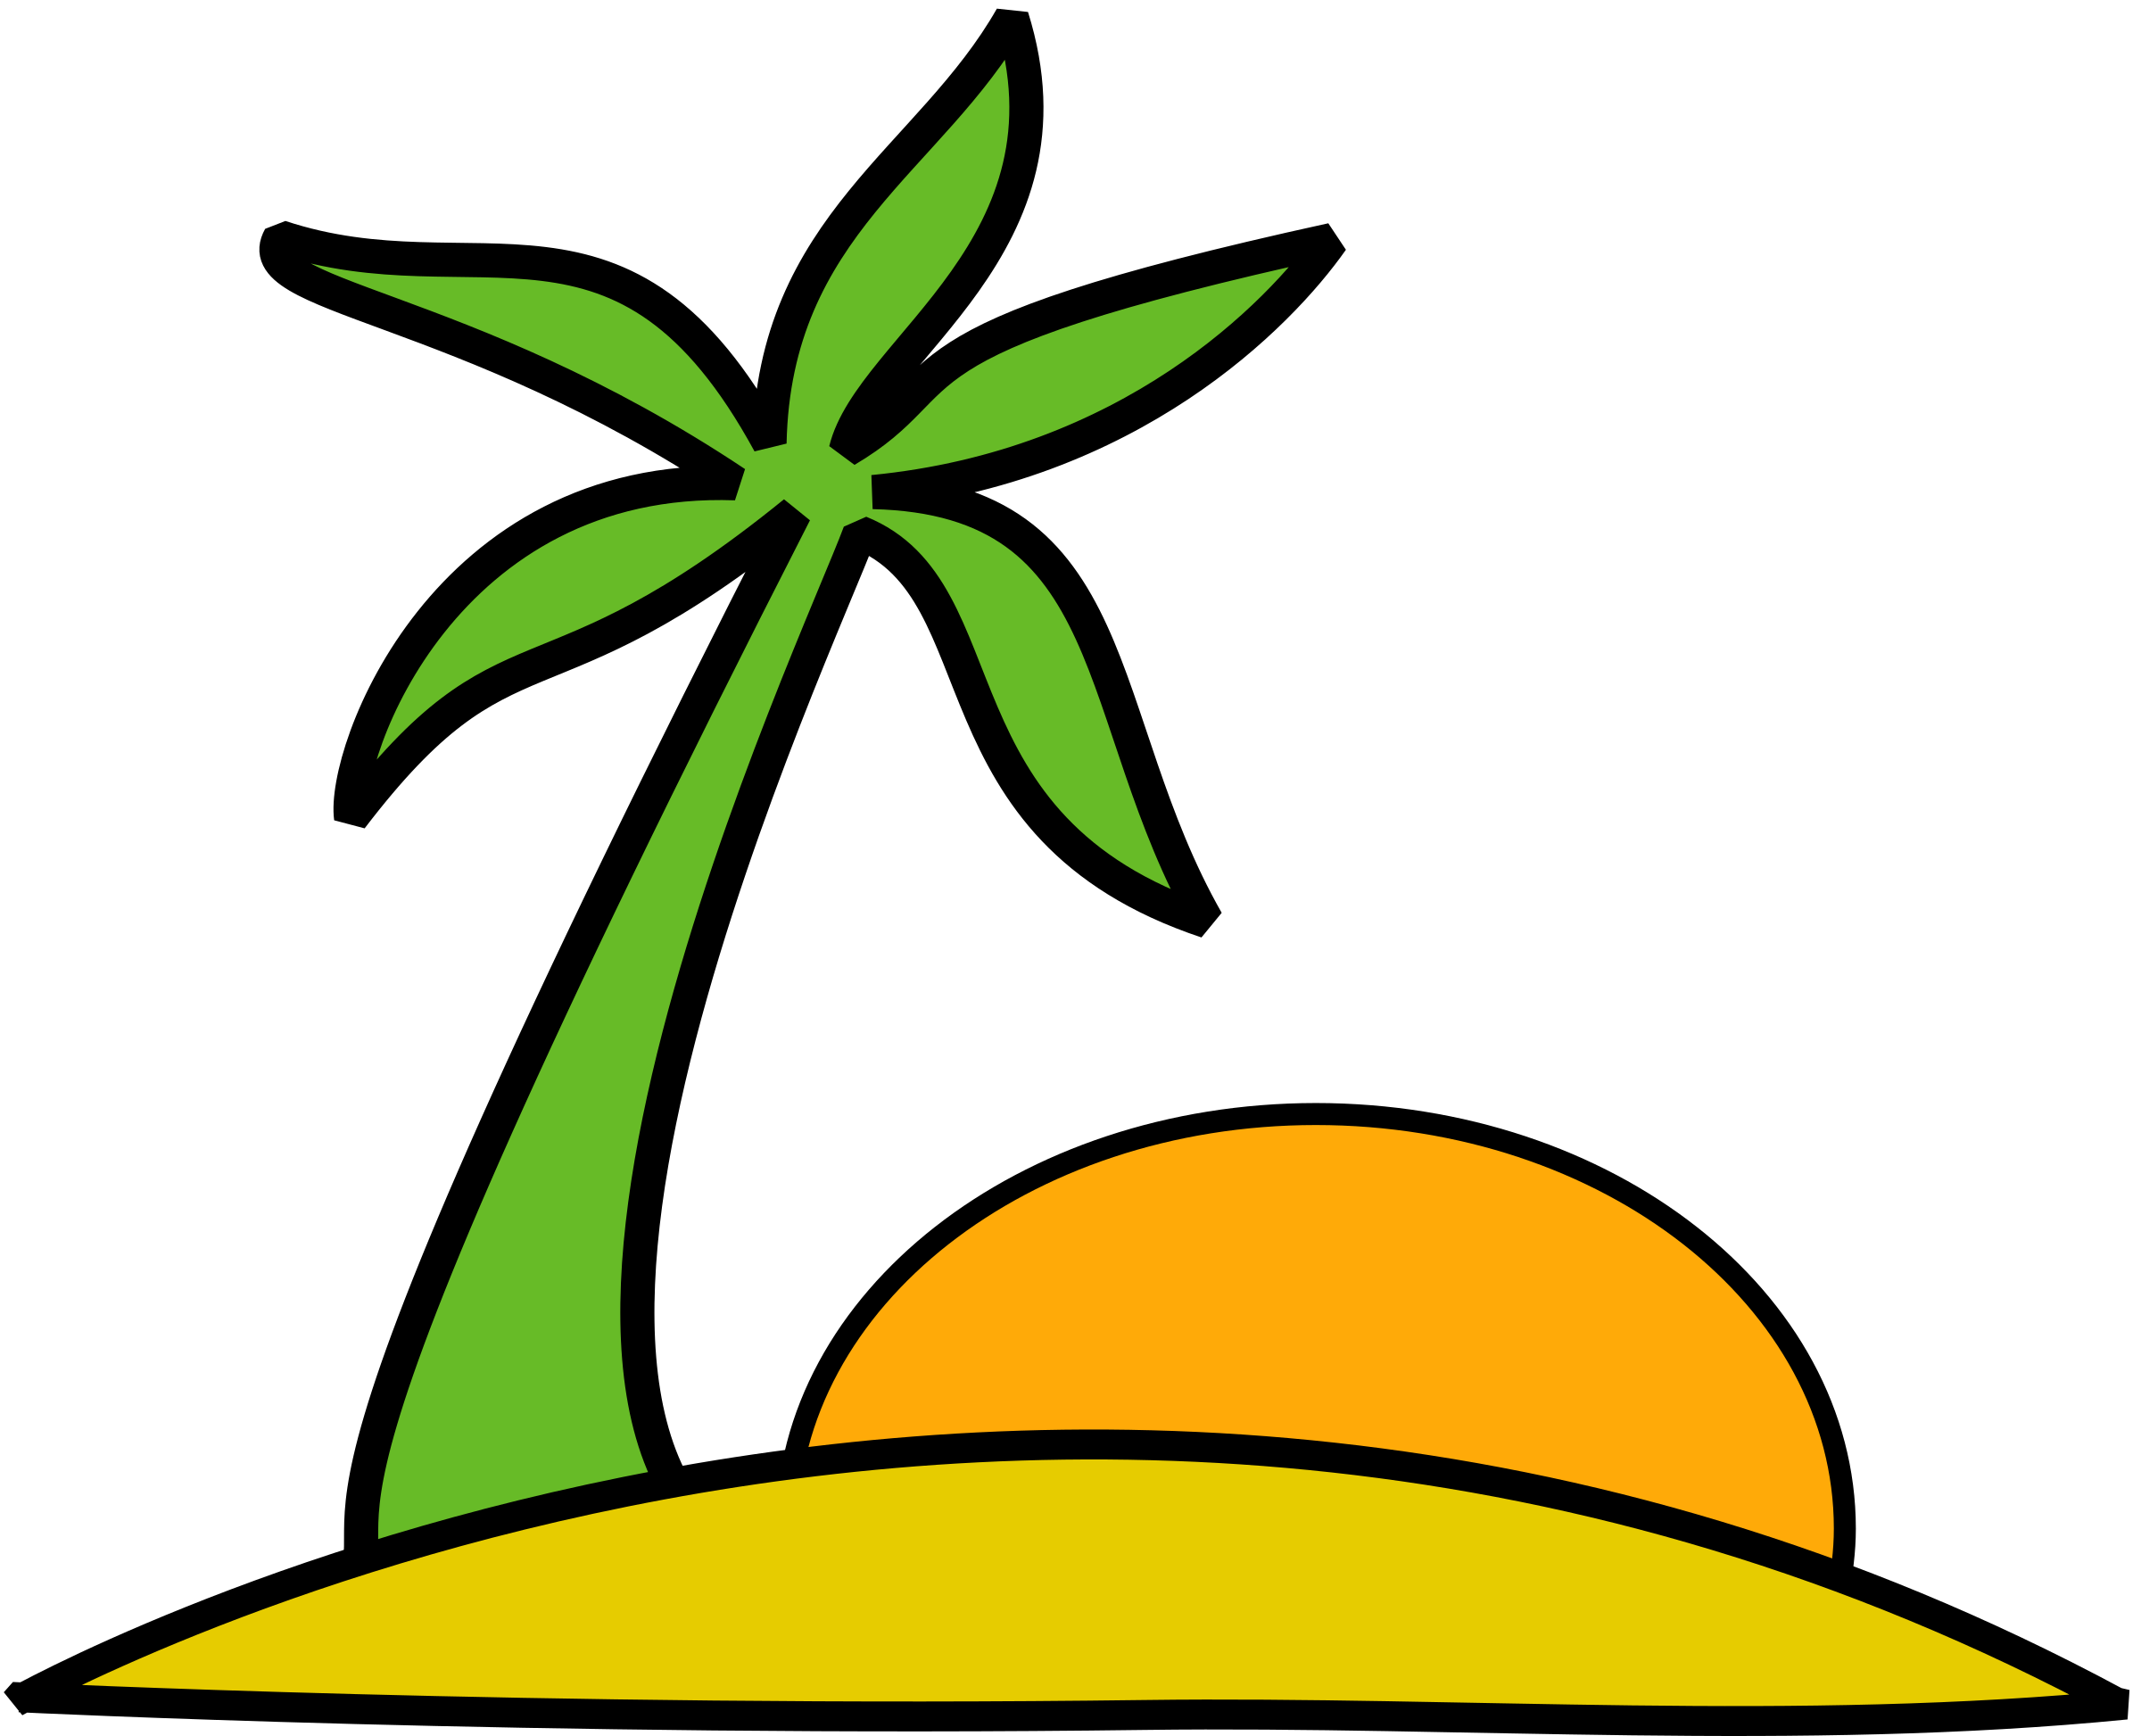 Island clipart small island. Palm and the sun